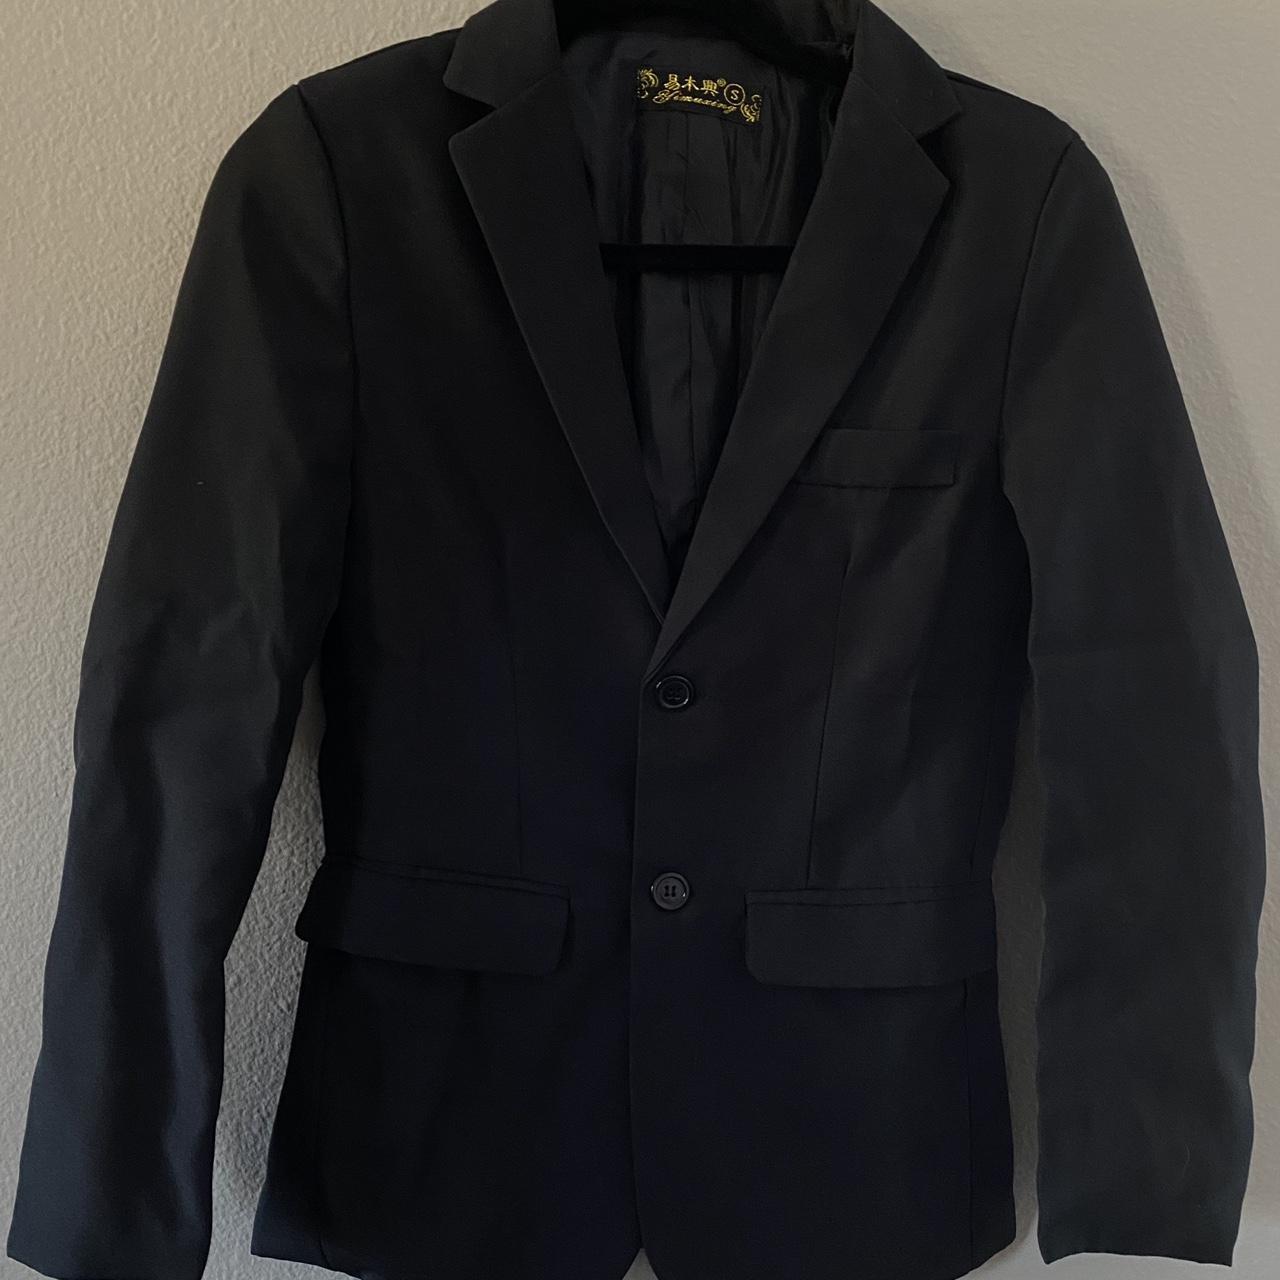 Yimuxing Black Suit Jacket with Buttons - Depop